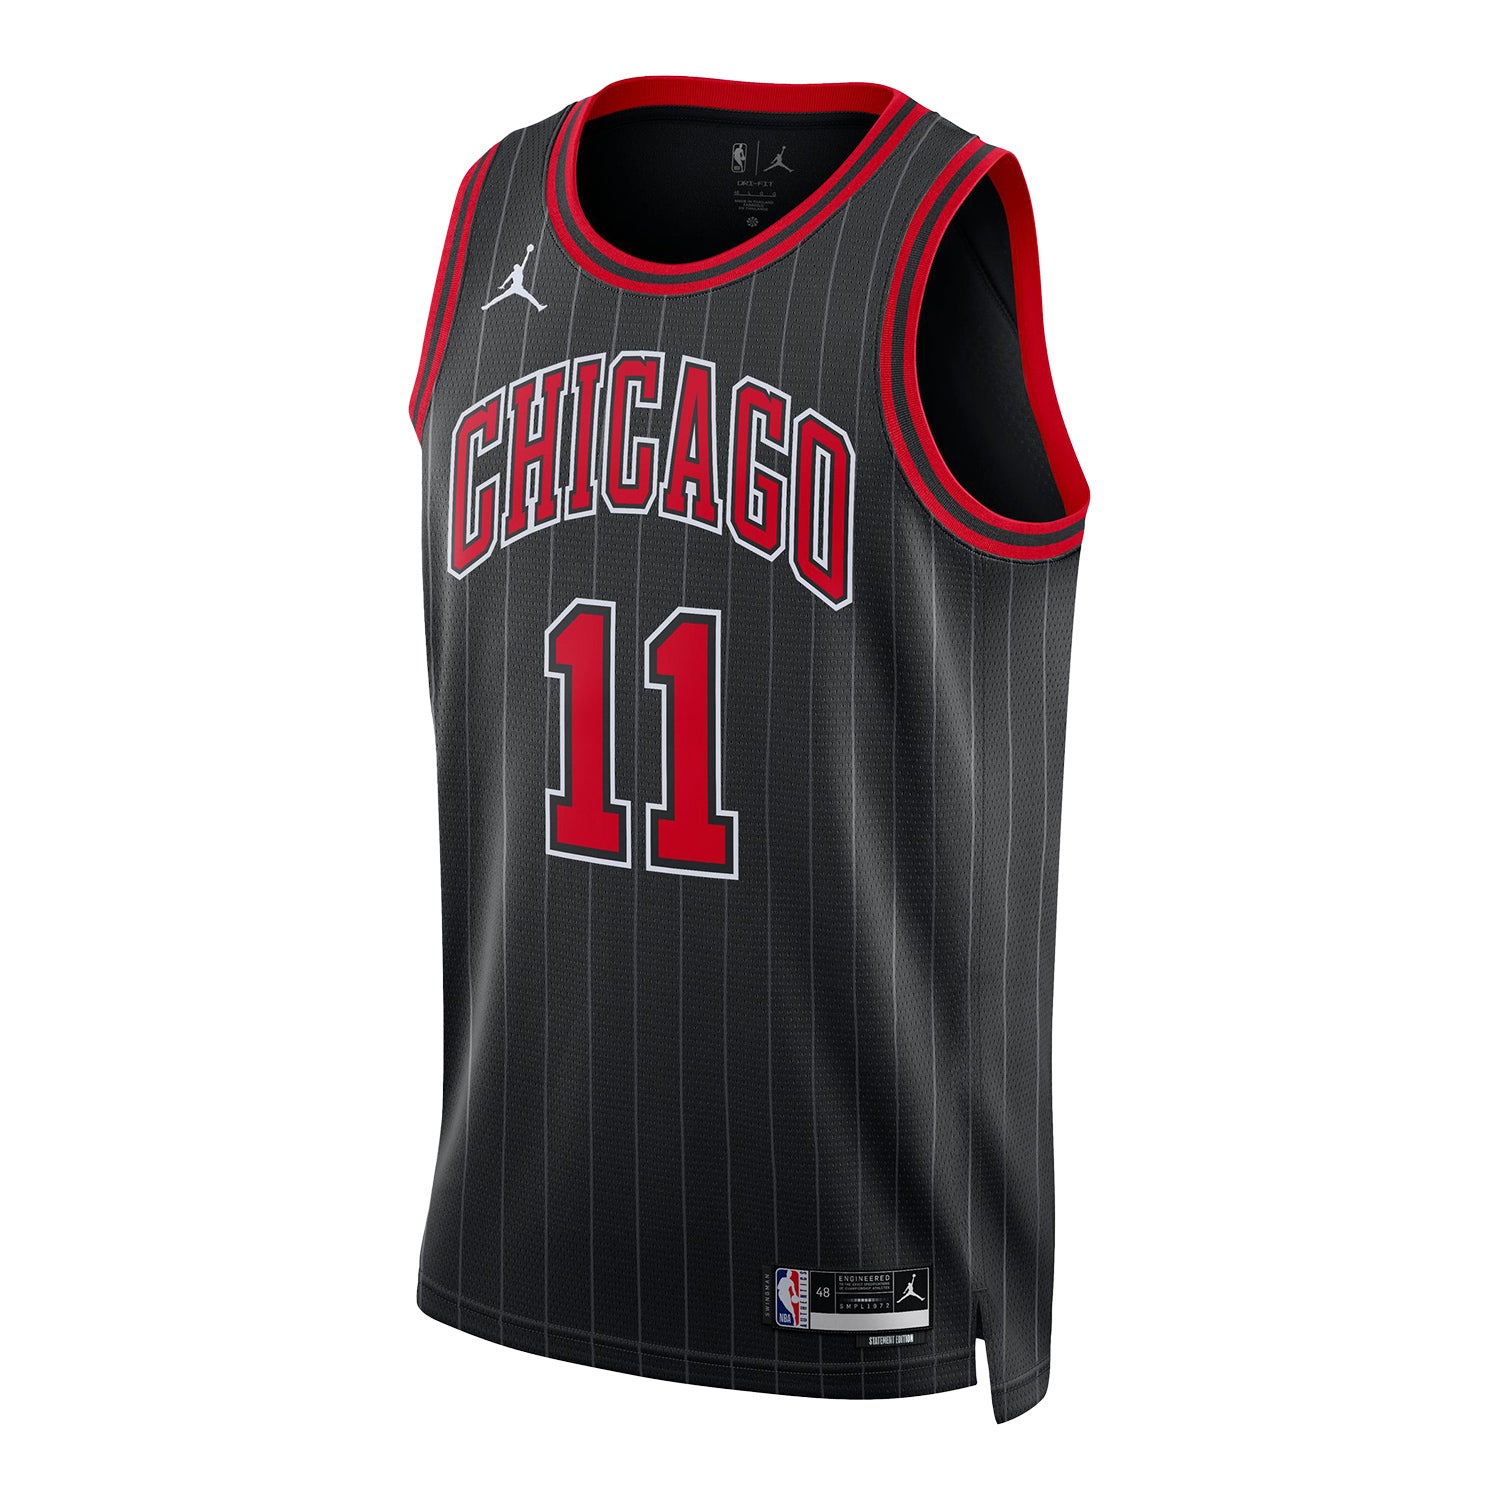 Chicago Bulls demar derozan 11 swingman jersey men's basketball